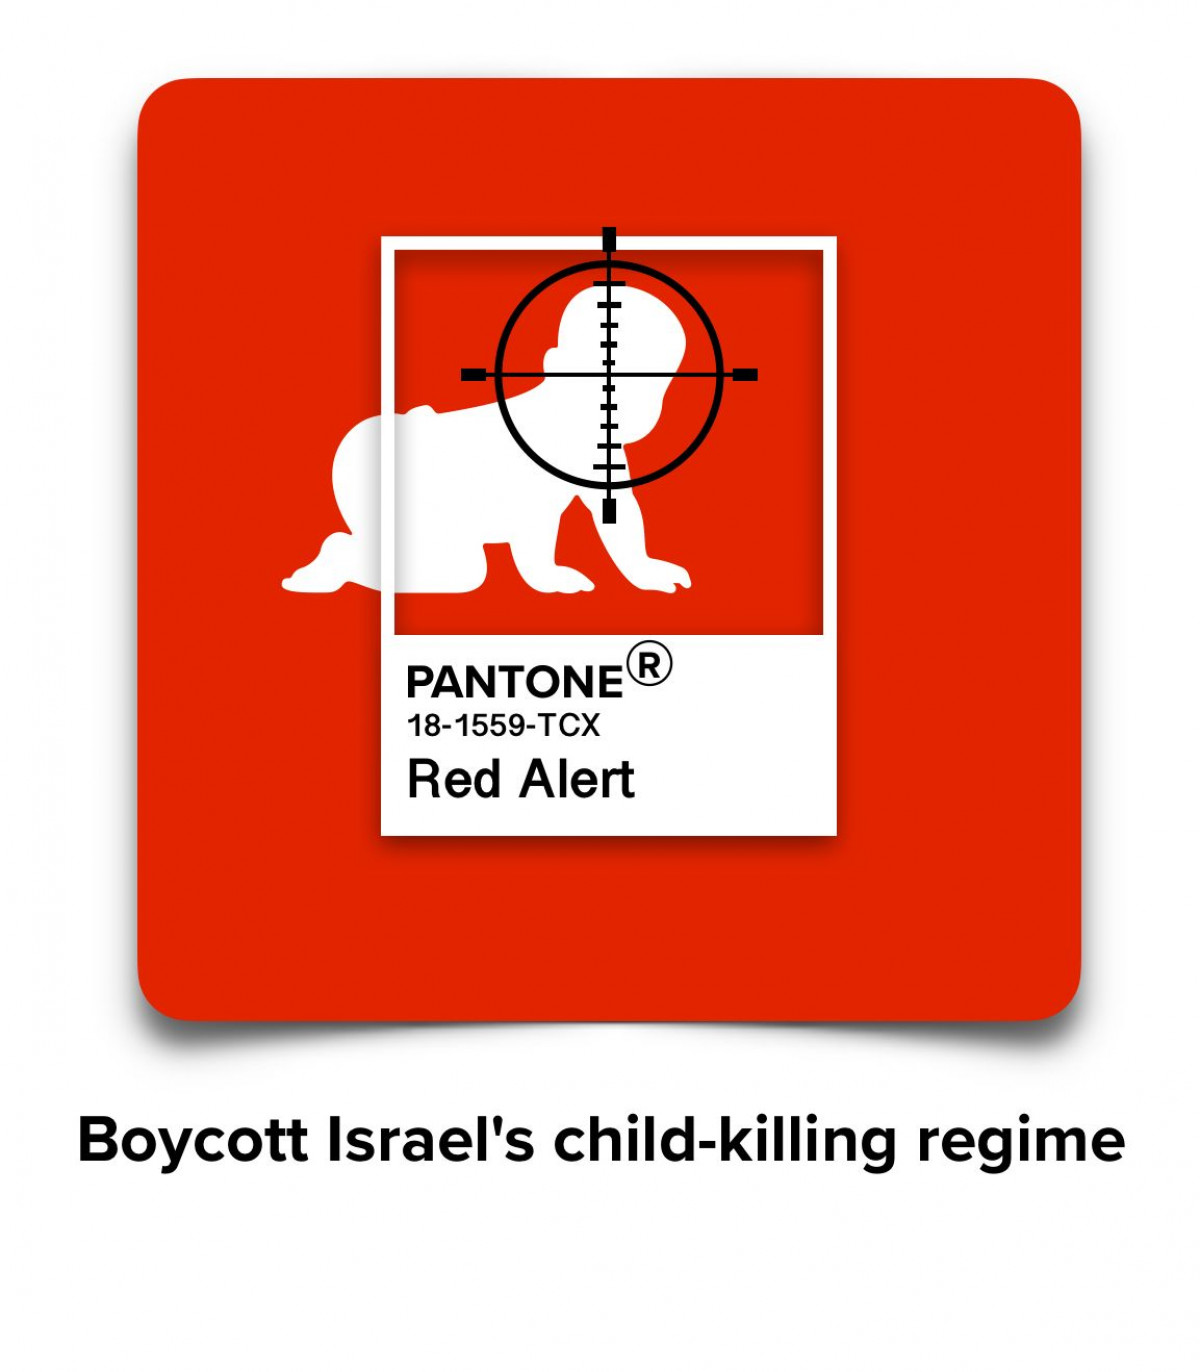 Boycott Israel's child-kiling regime poster